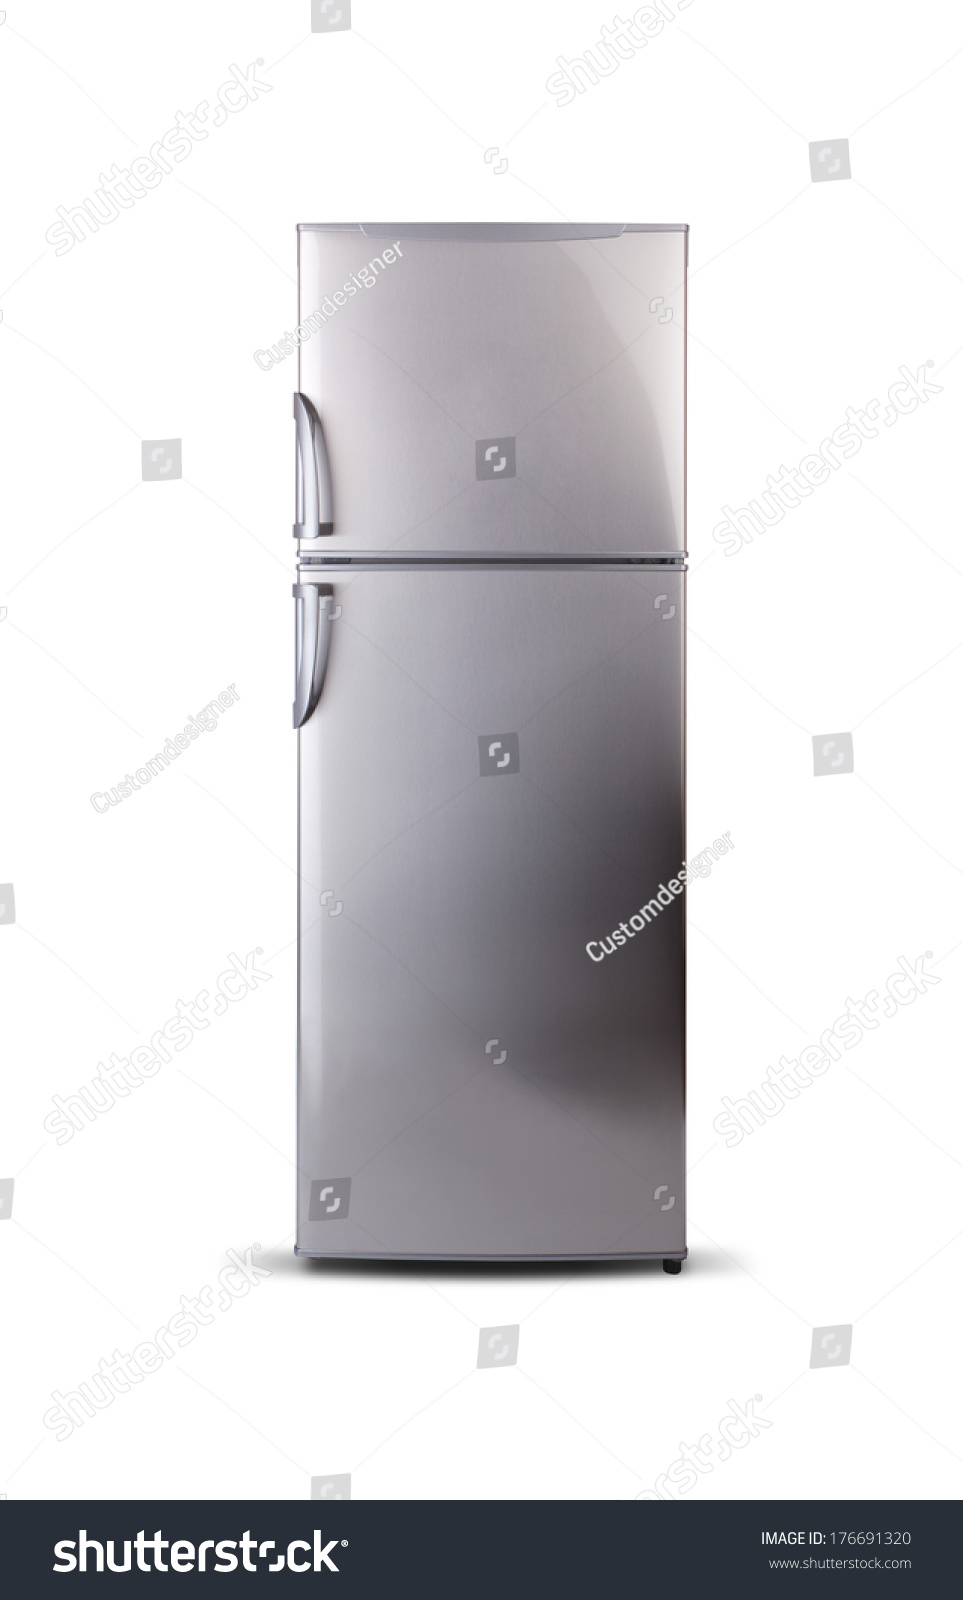 Stock Photo Stainless Steel Refrigerator 176691320 